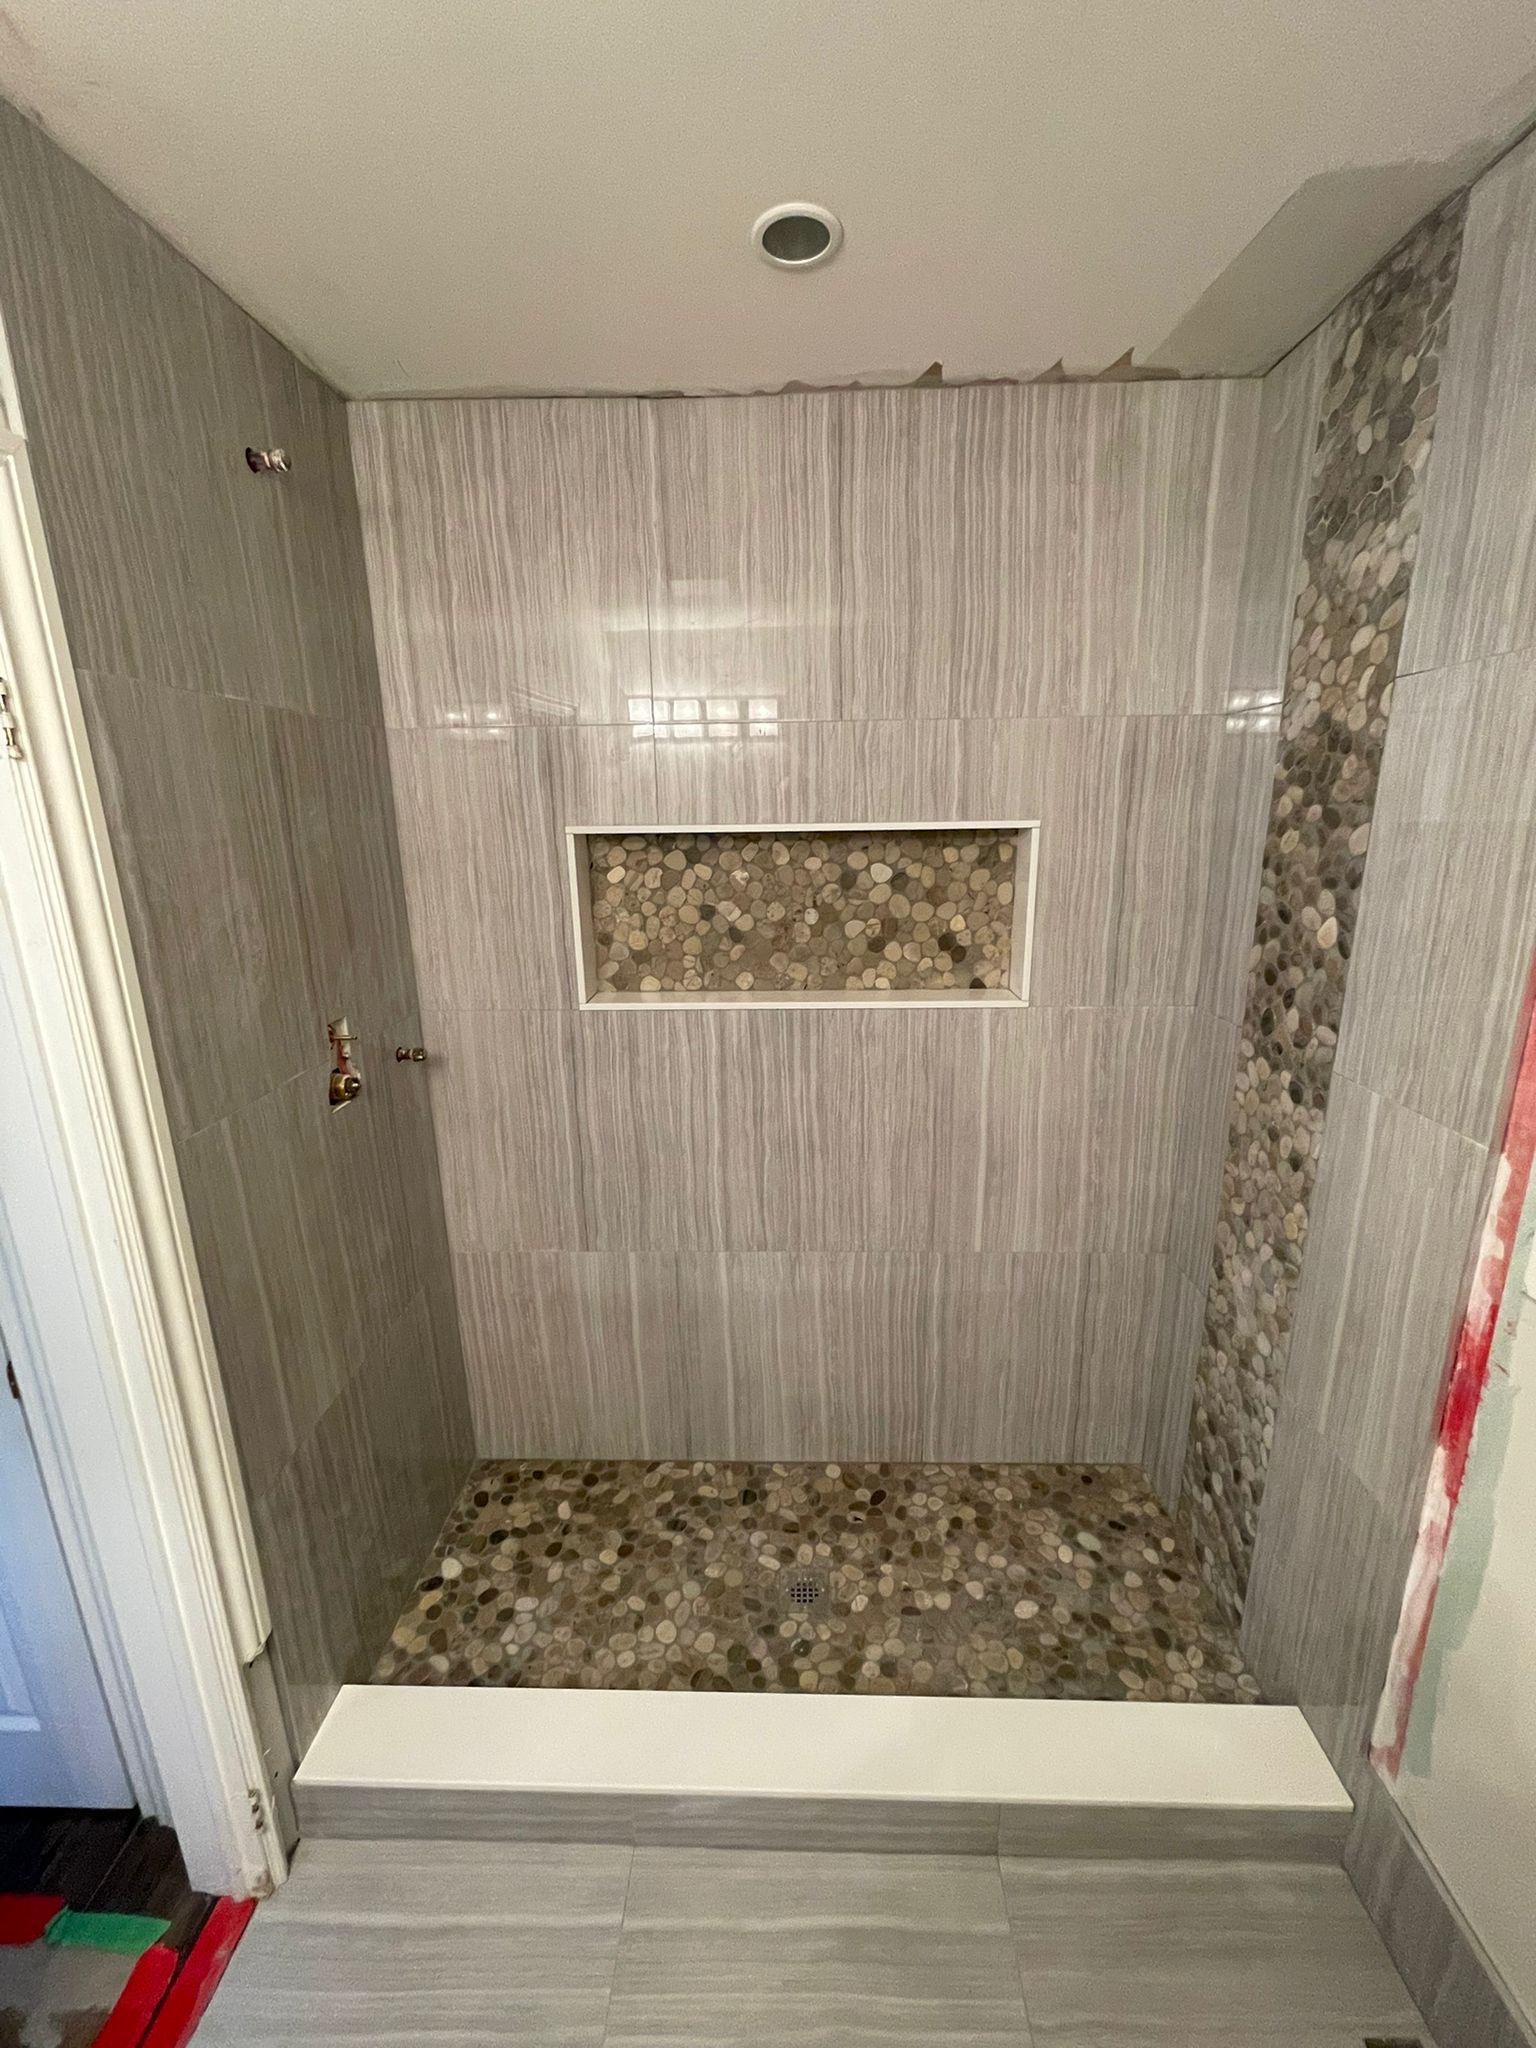 Guelph Bathroom tiles installation at Markom Tiles